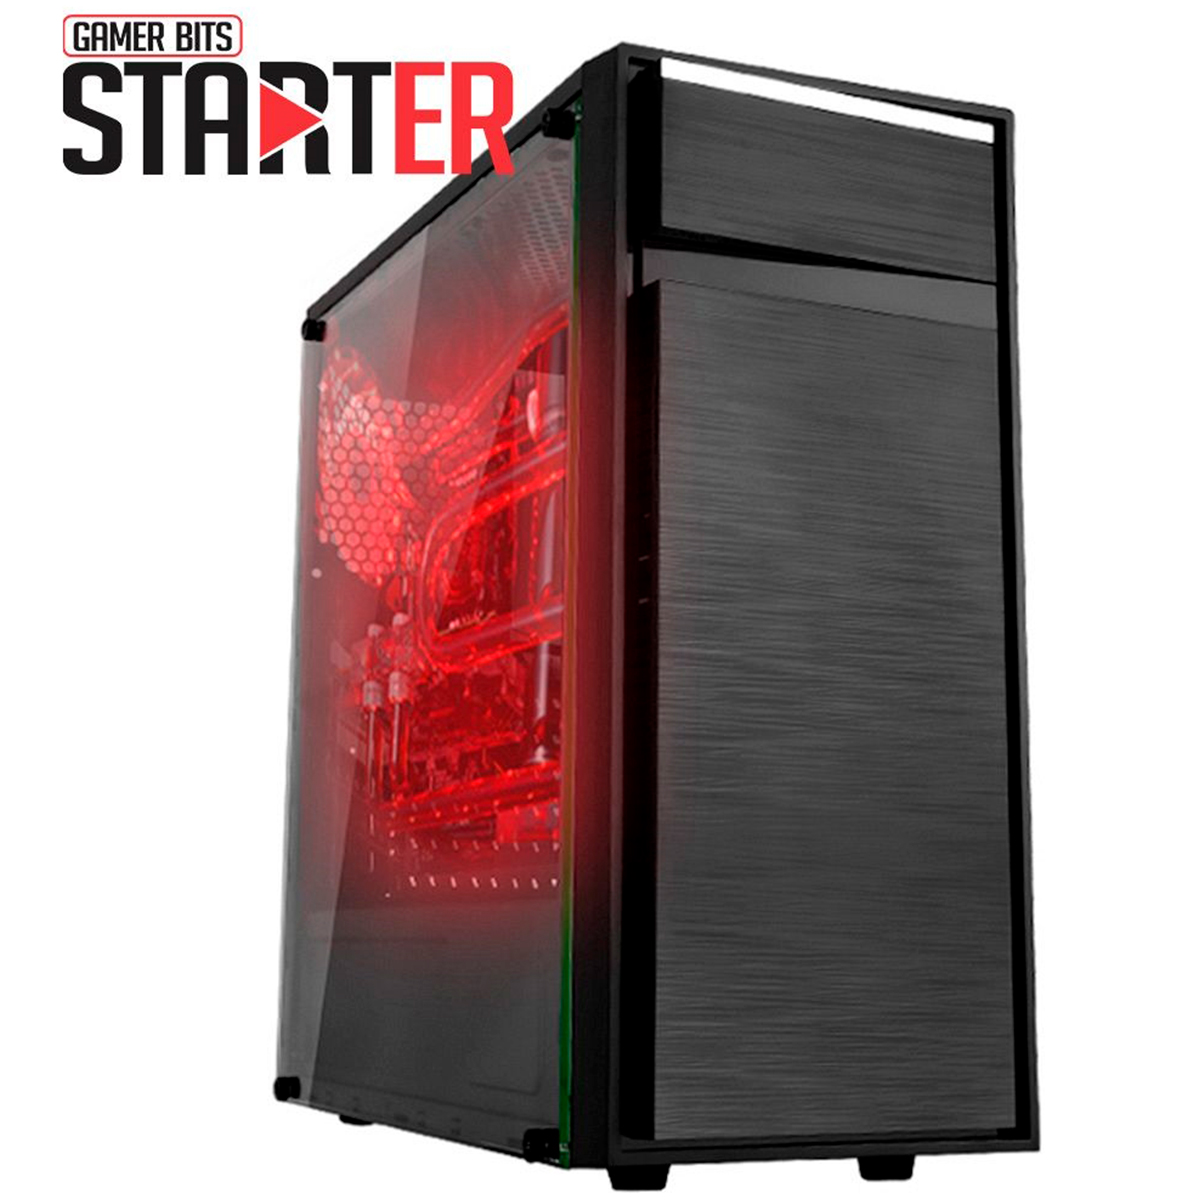 PC Gamer Bits Starter - AMD FX-4300, 8GB, SSD 240, Geforce GTX 750